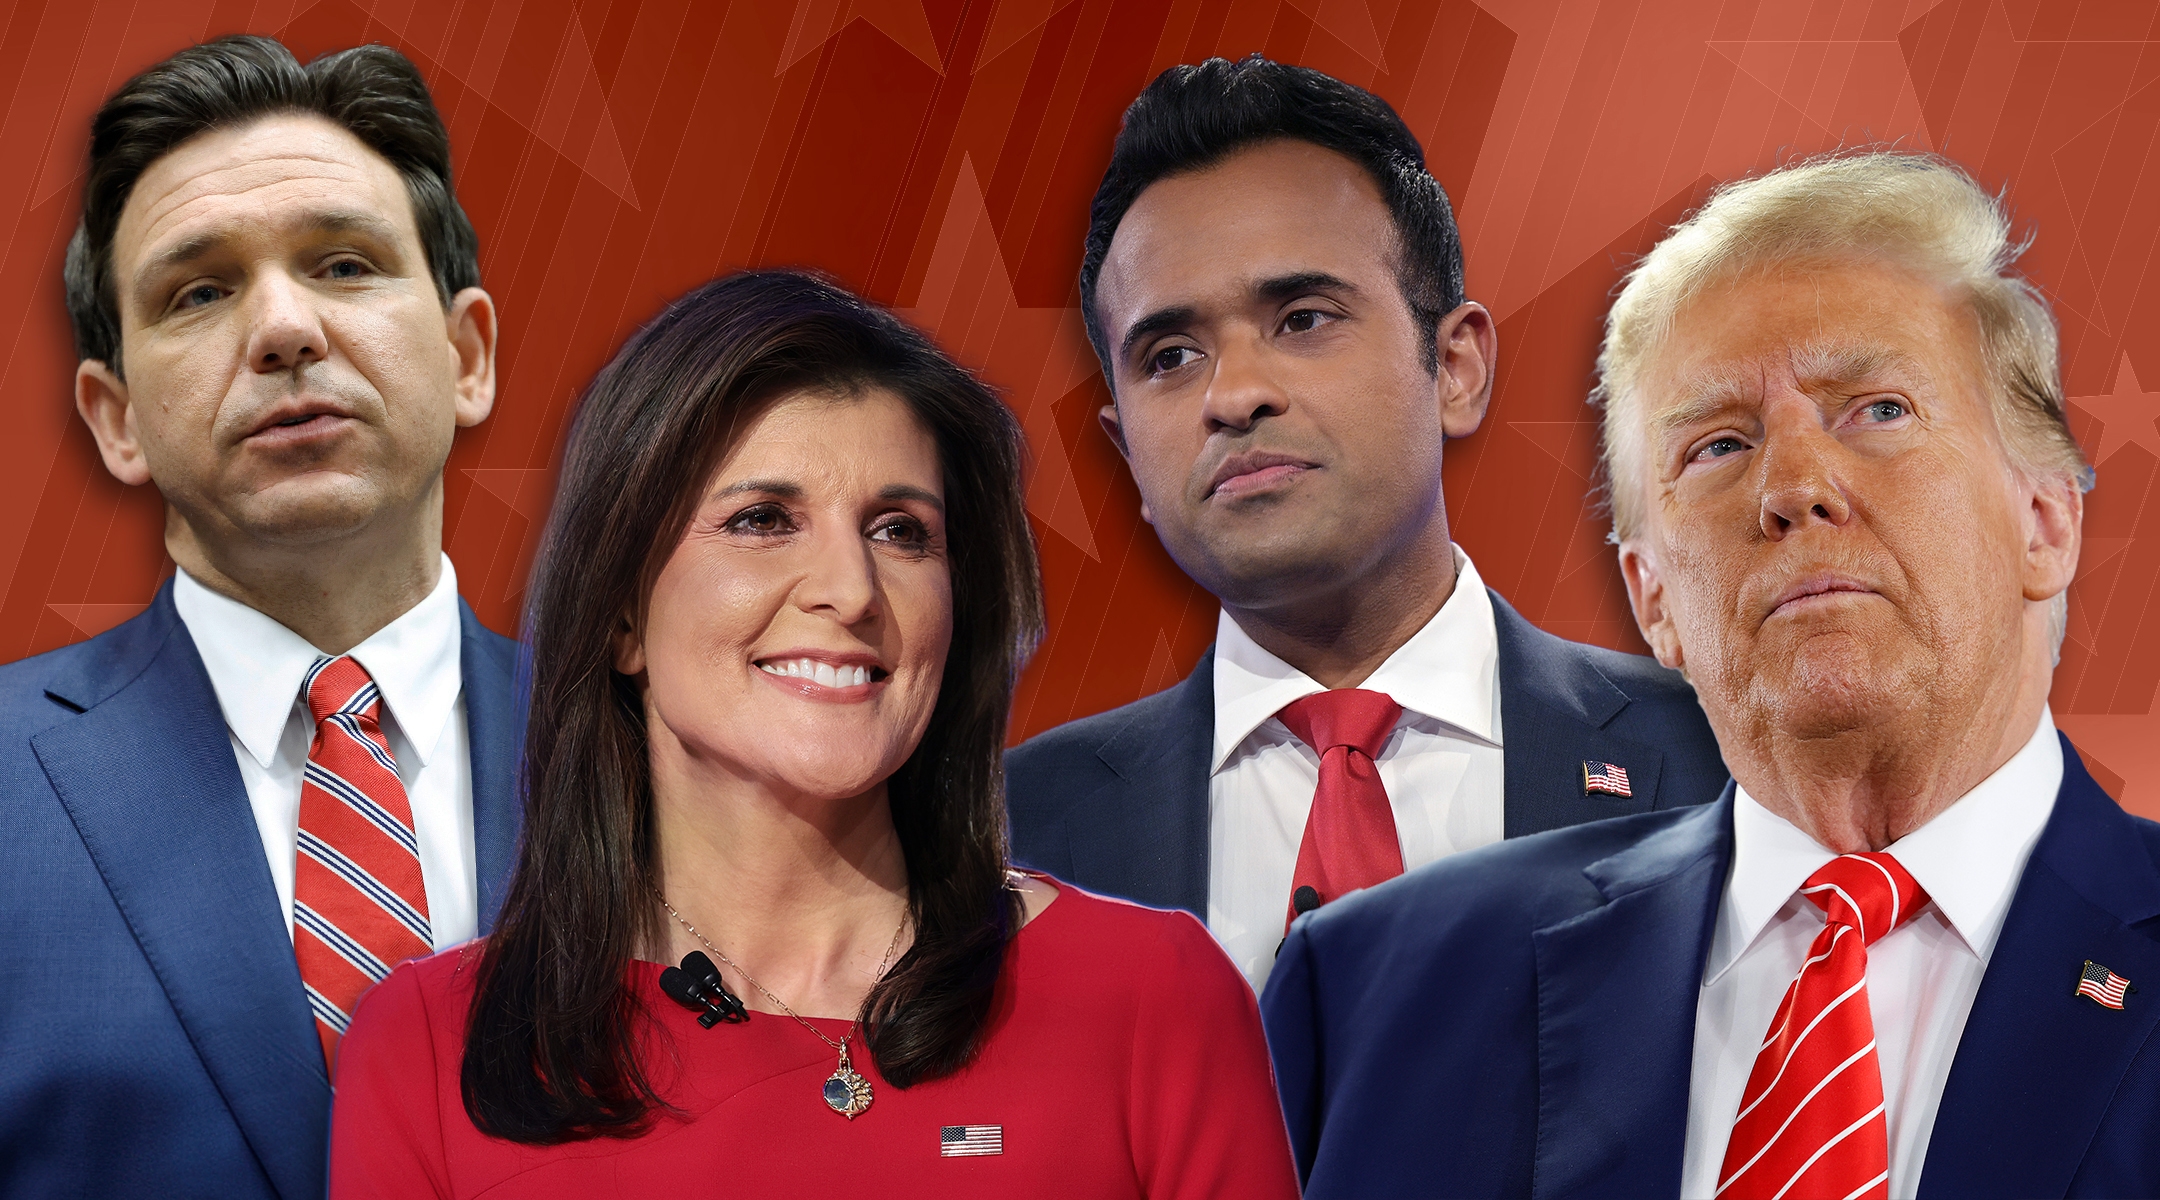 Ron DeSantis, Nikki Haley, Vivek Ramaswamy and Donald Trump